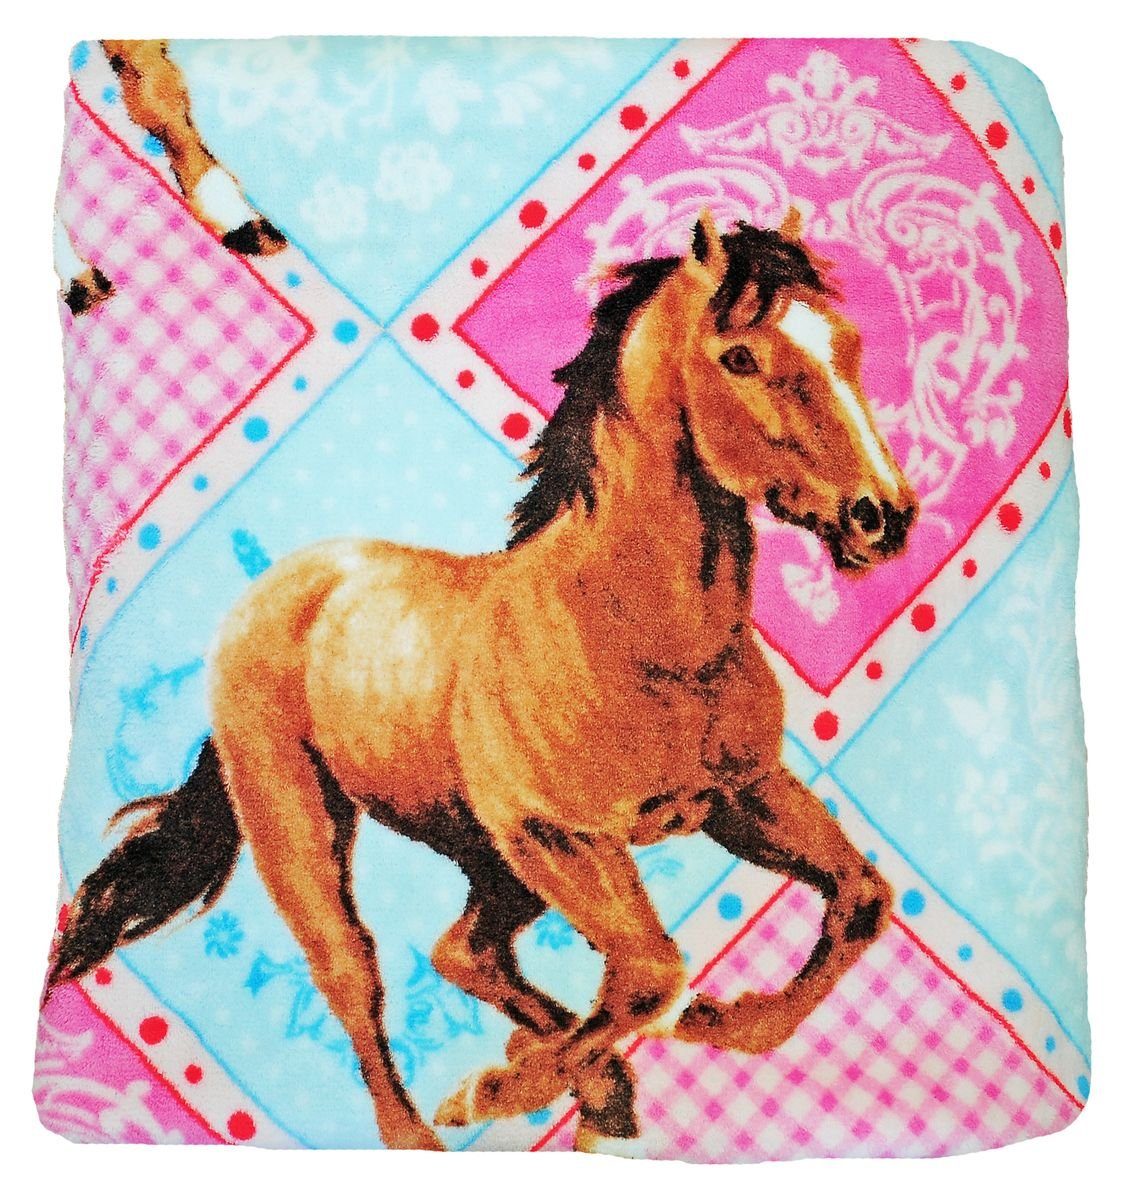 Kinder Rosa Pony kariert JACK, Fleece, 150x200cm Decke Fleecedecke Kinderdecke Hellblau Pferde Kuscheldecke Coral